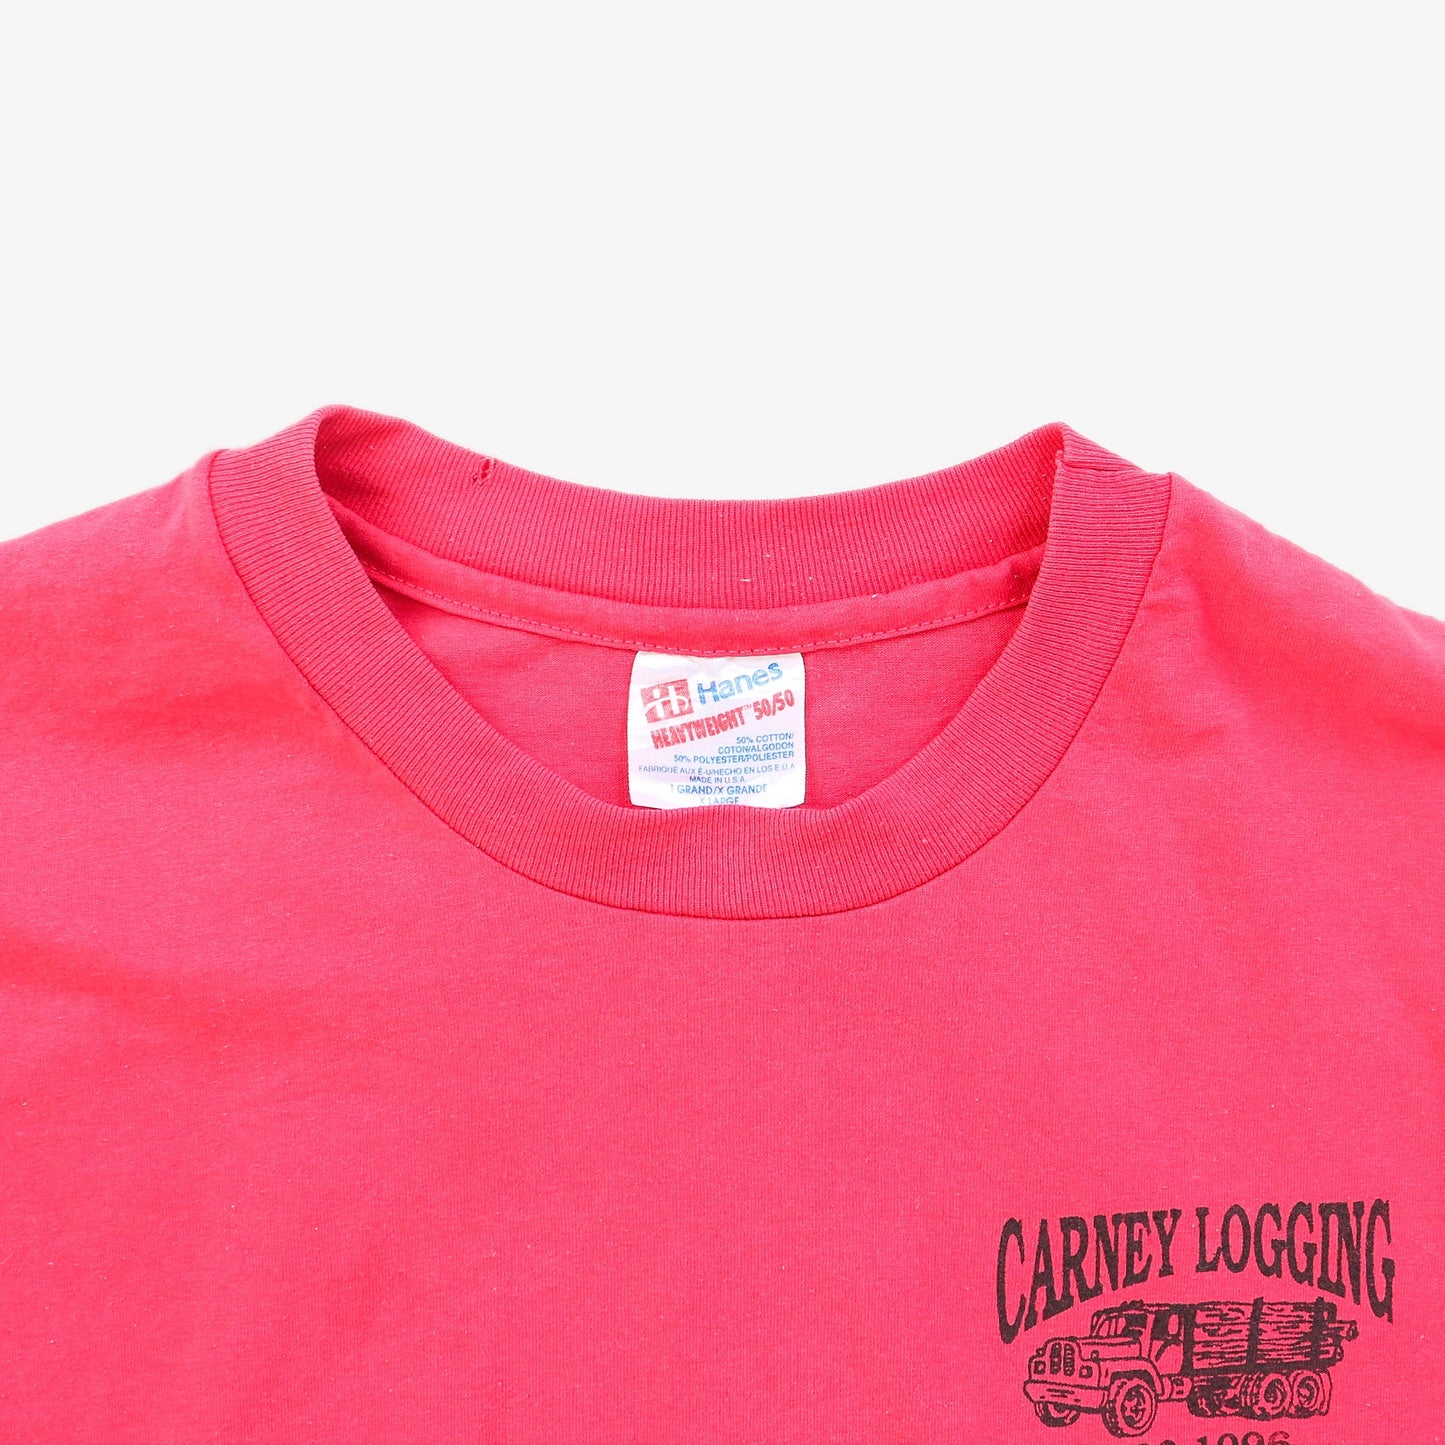 Vintage "Carney Logging" T-Shirt - American Madness